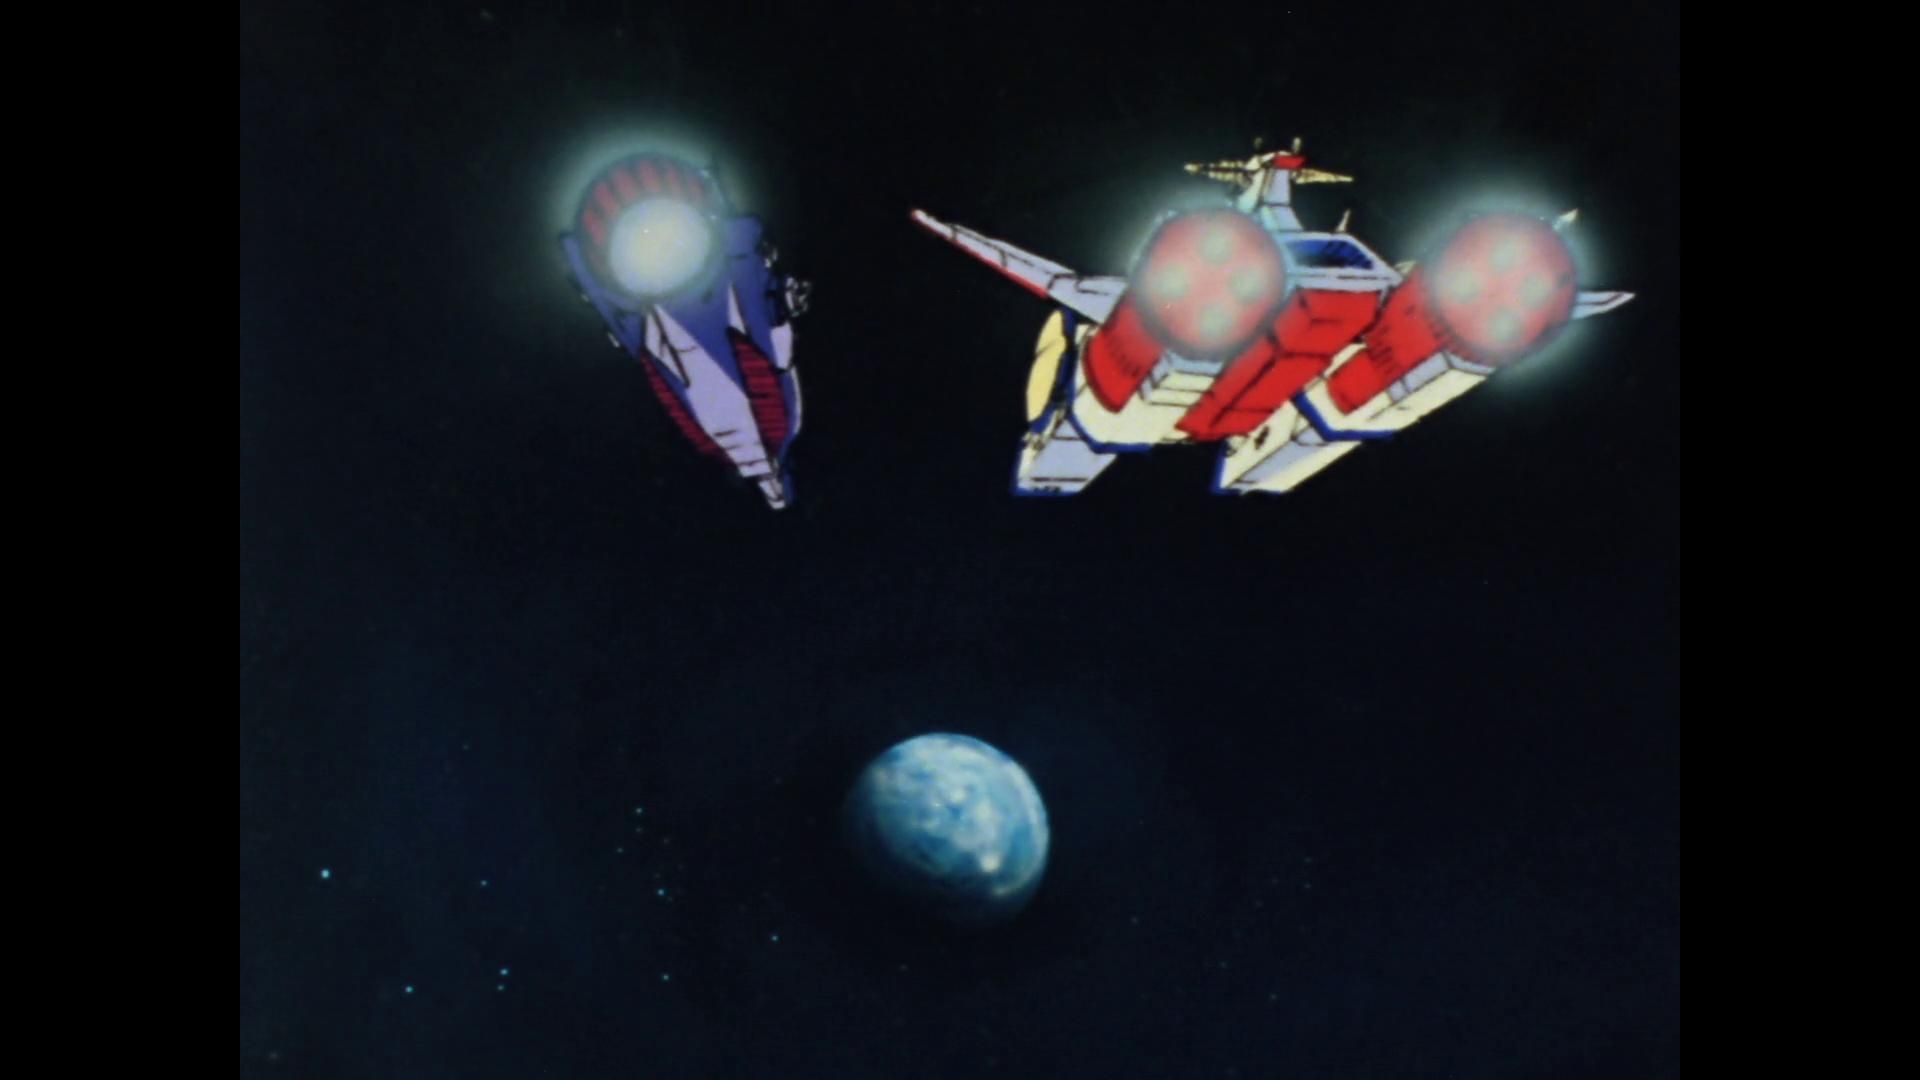 Mobile Suit Gundam background